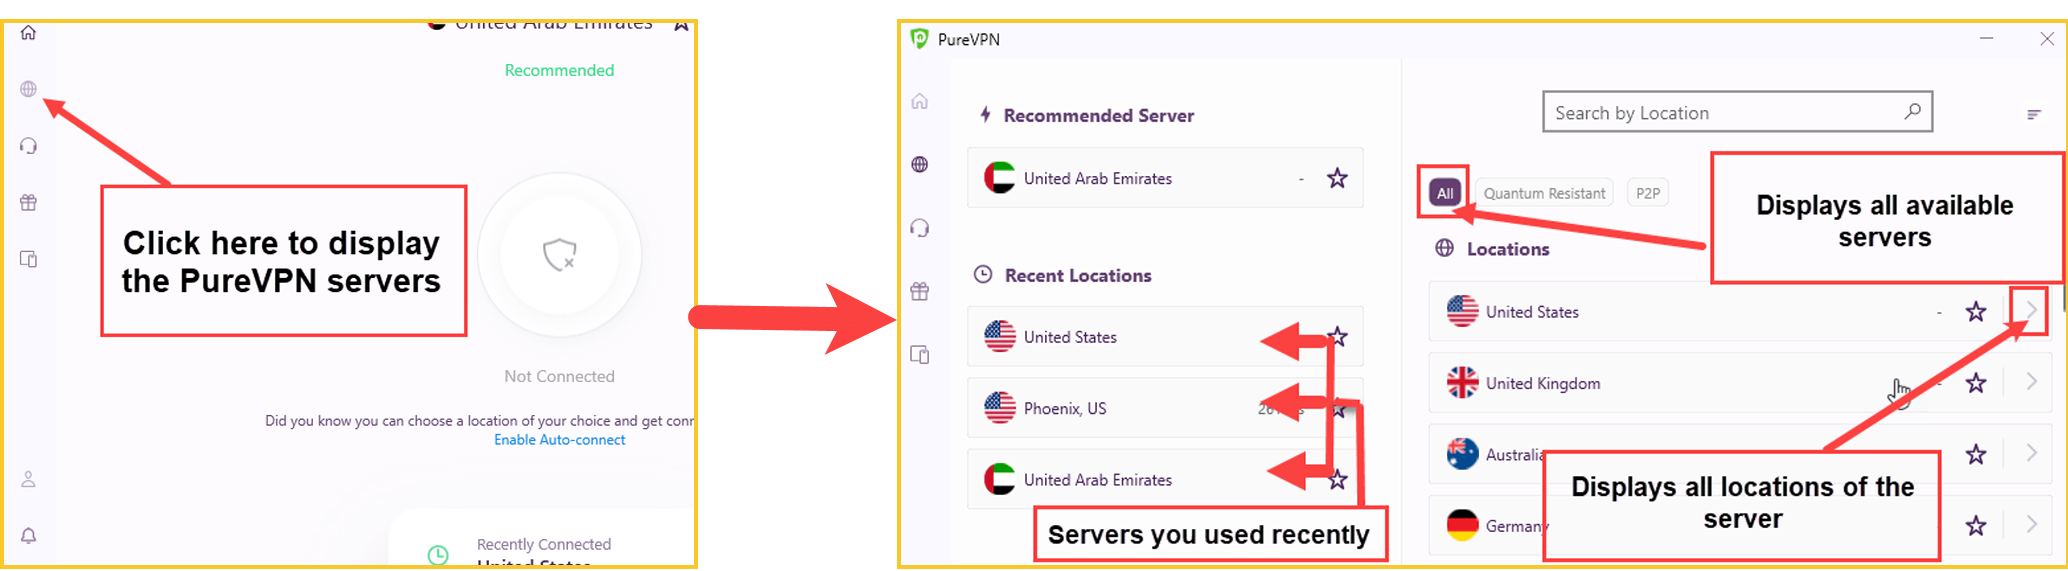 purevpn-server-locations-interface-in-Hong Kong